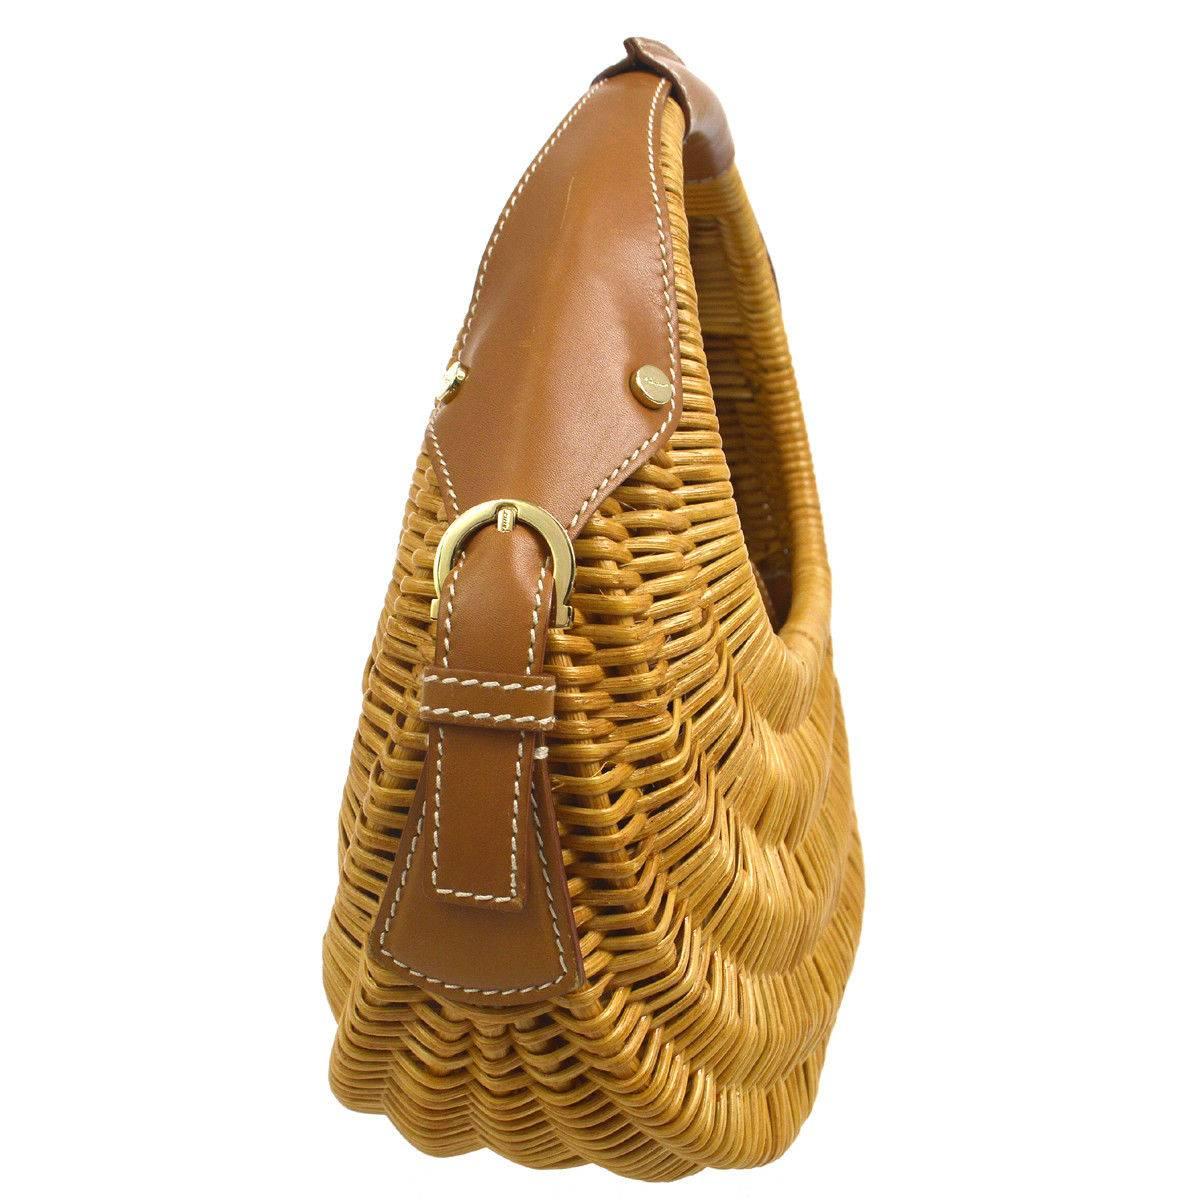 Salvatore Ferragamo Cognac Basket Weave Gold Top Handle Satchel Evening Picnic Bag

Wicker
Gold tone hardware
Woven lining
Made in Italy
Handle drop 5